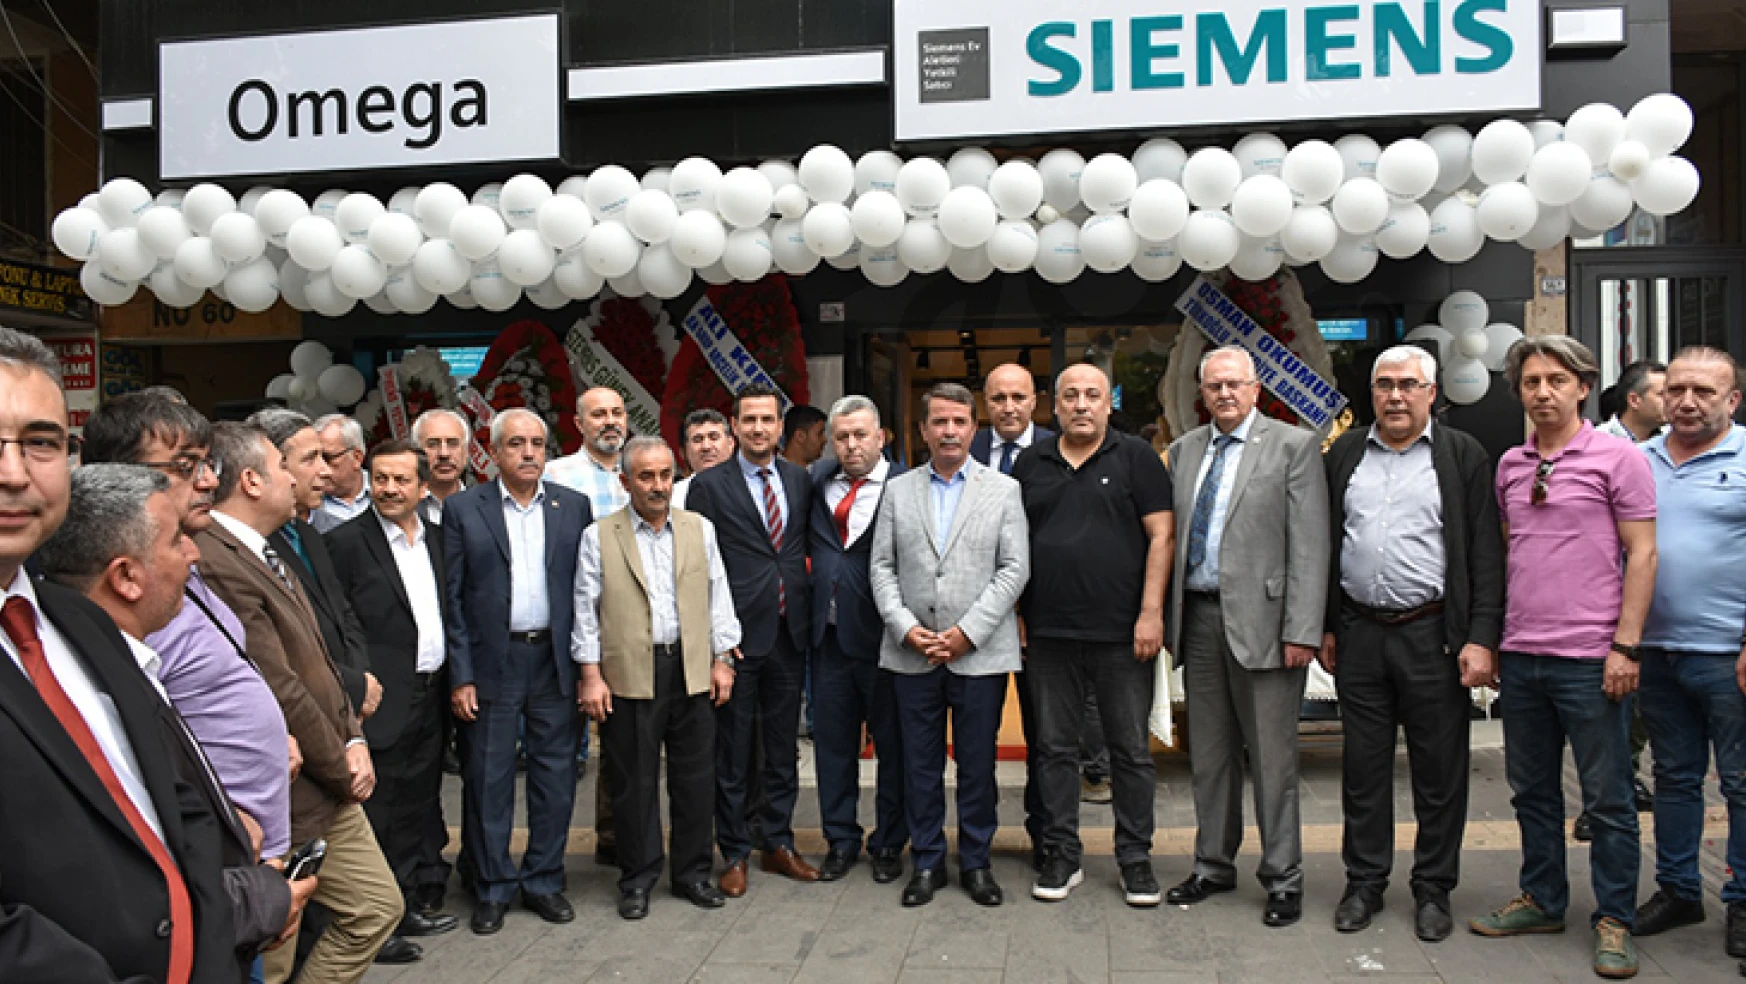 Siemens Omega bayi Kahramanmaraş'ta açıldı